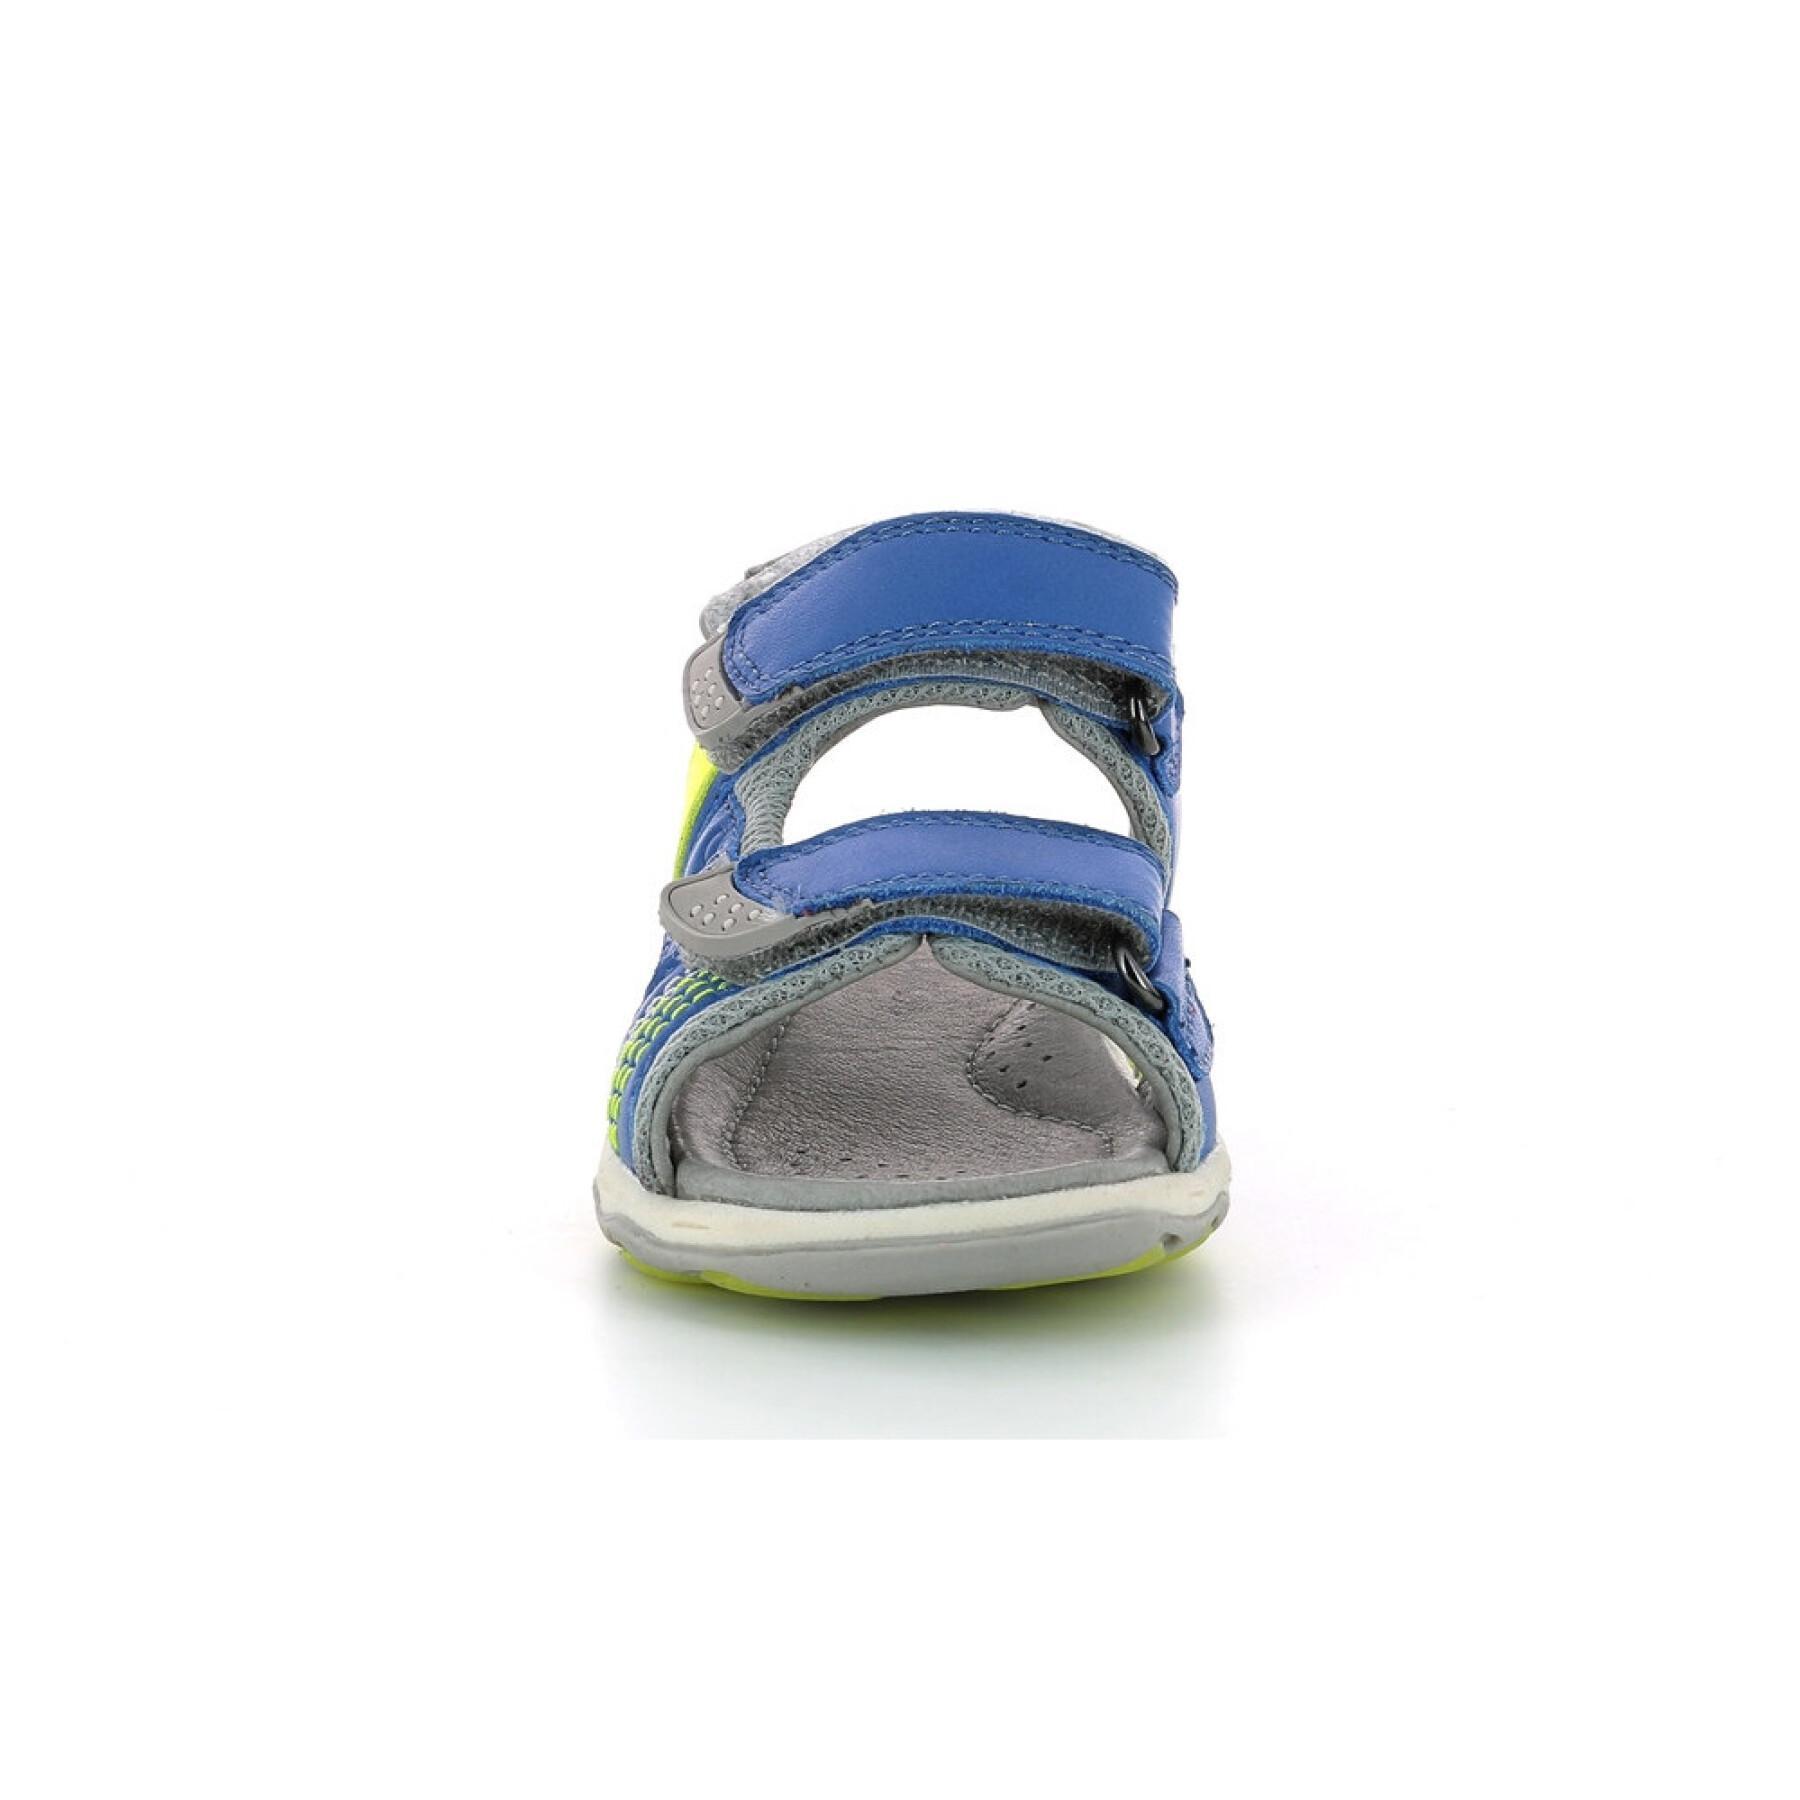 Children's sandals Aster Bohal